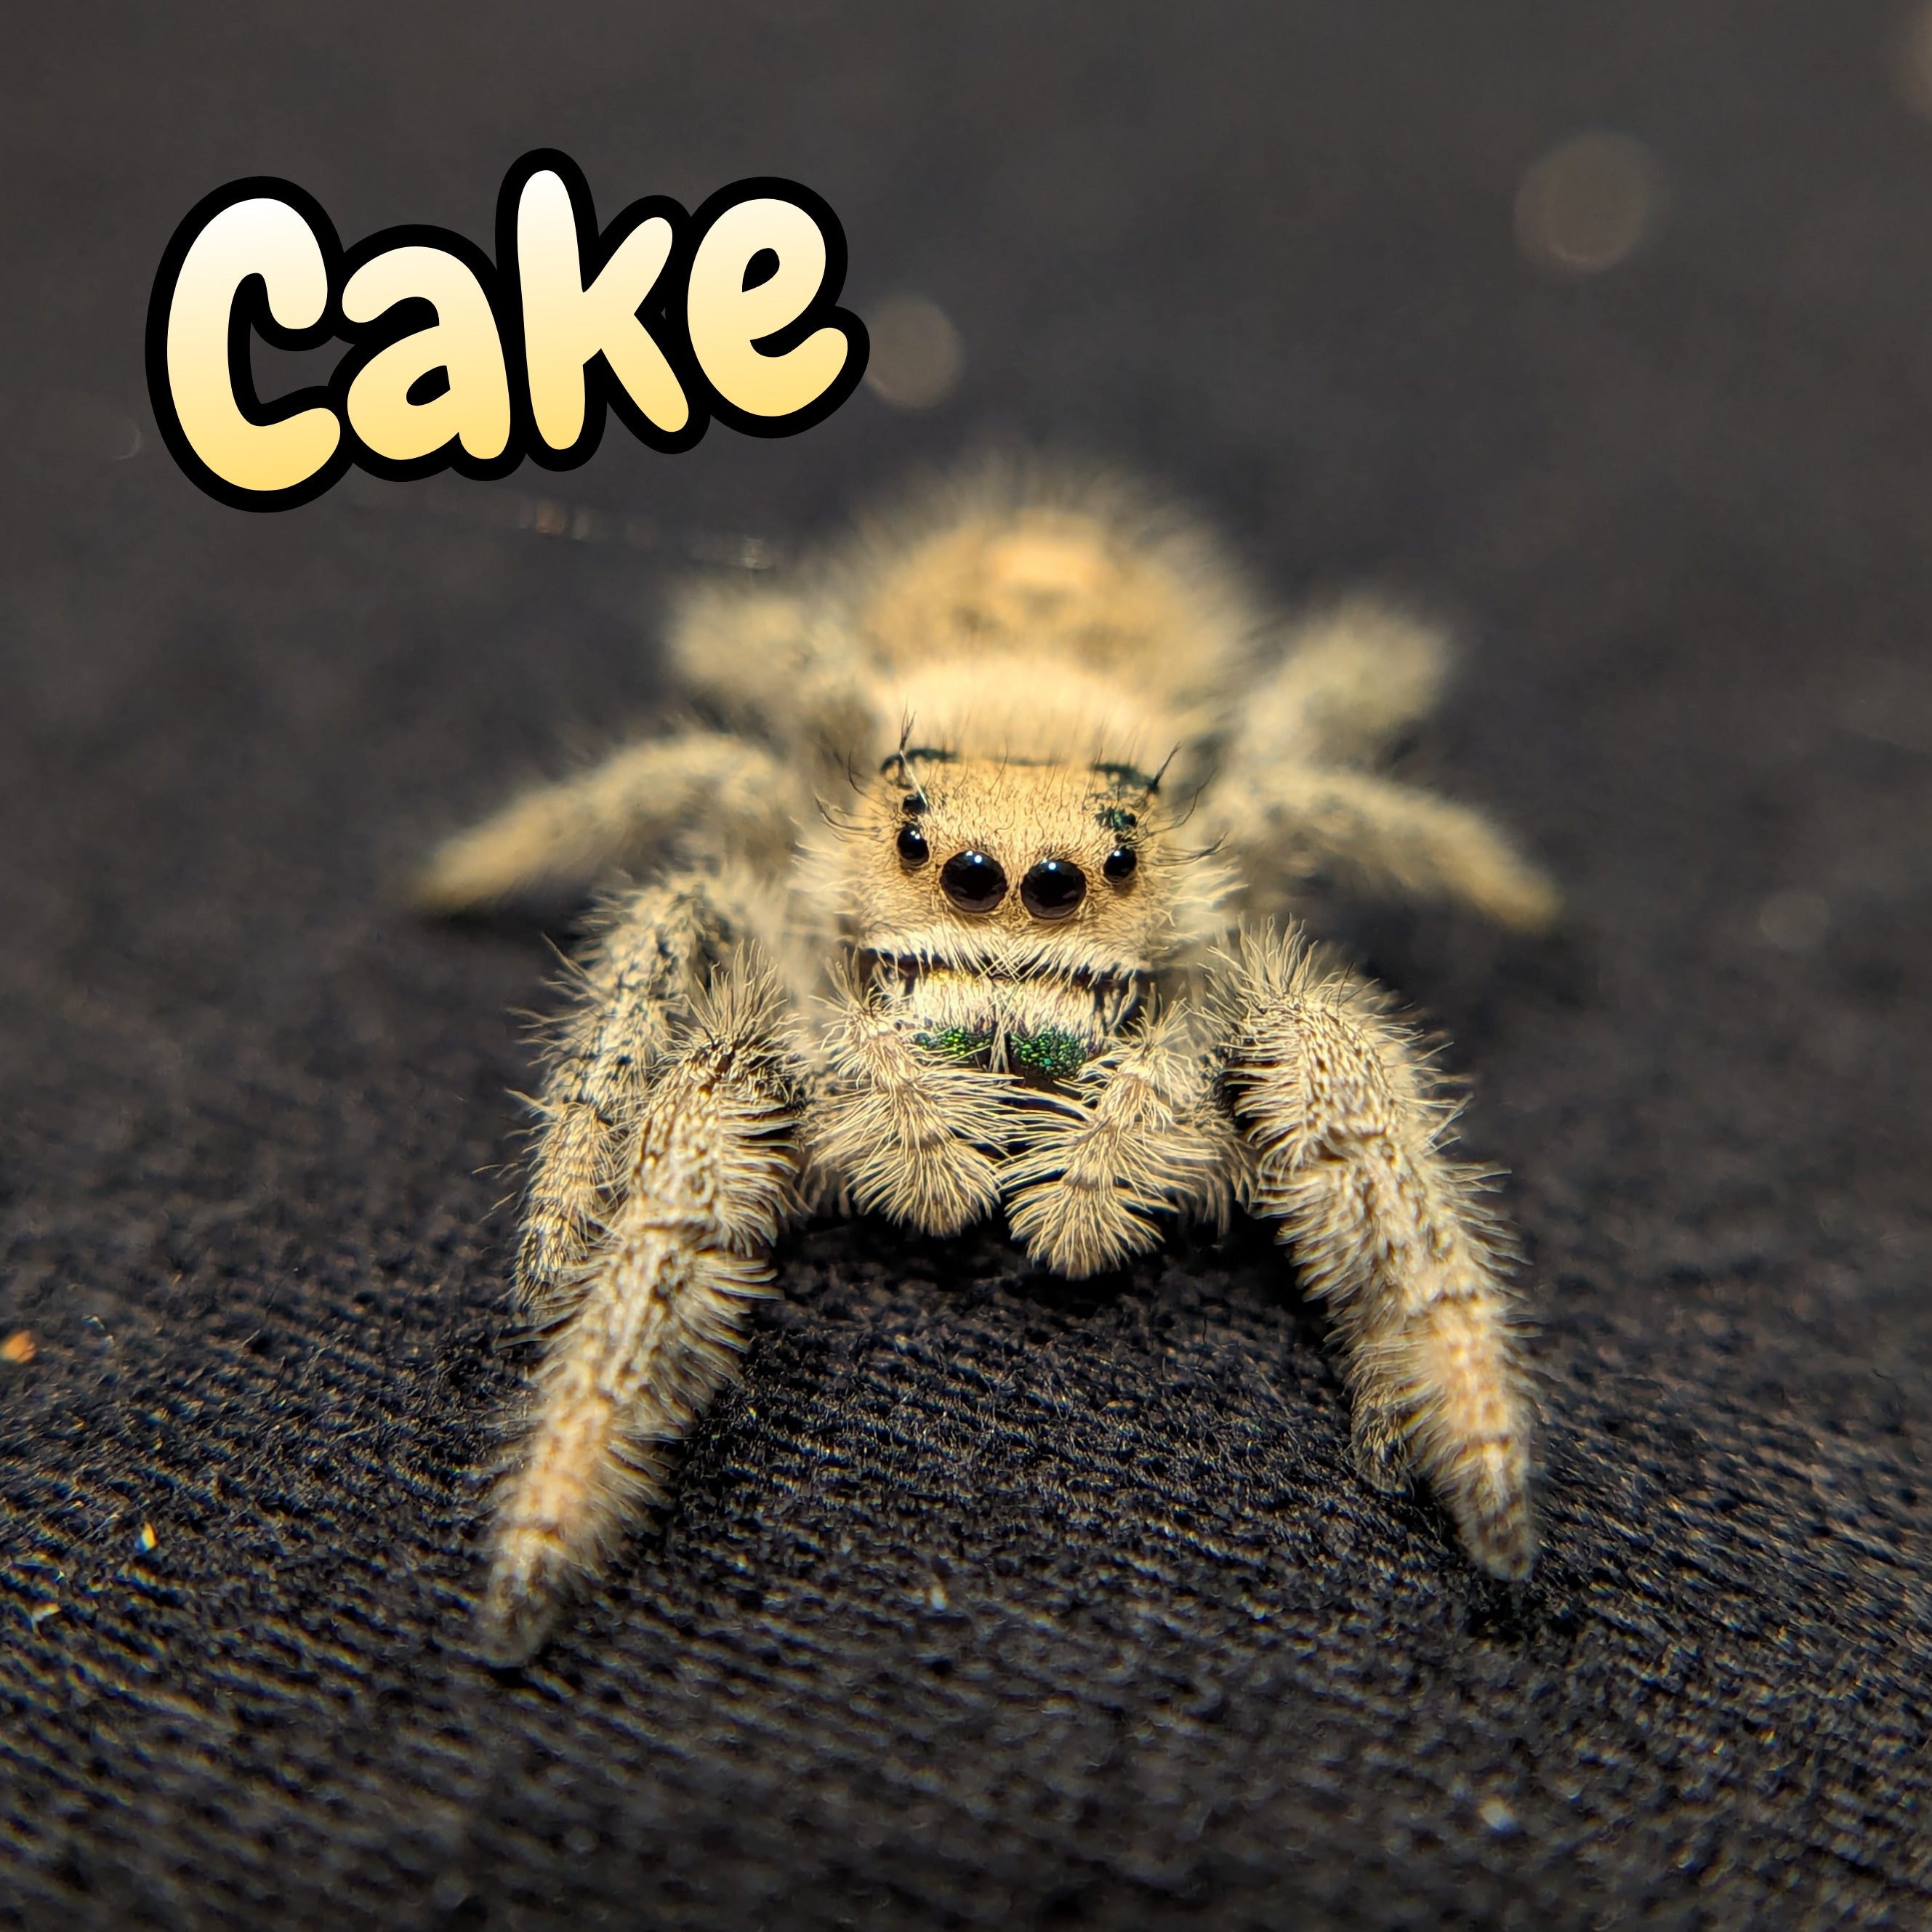 Regal Jumping Spider "Cake"